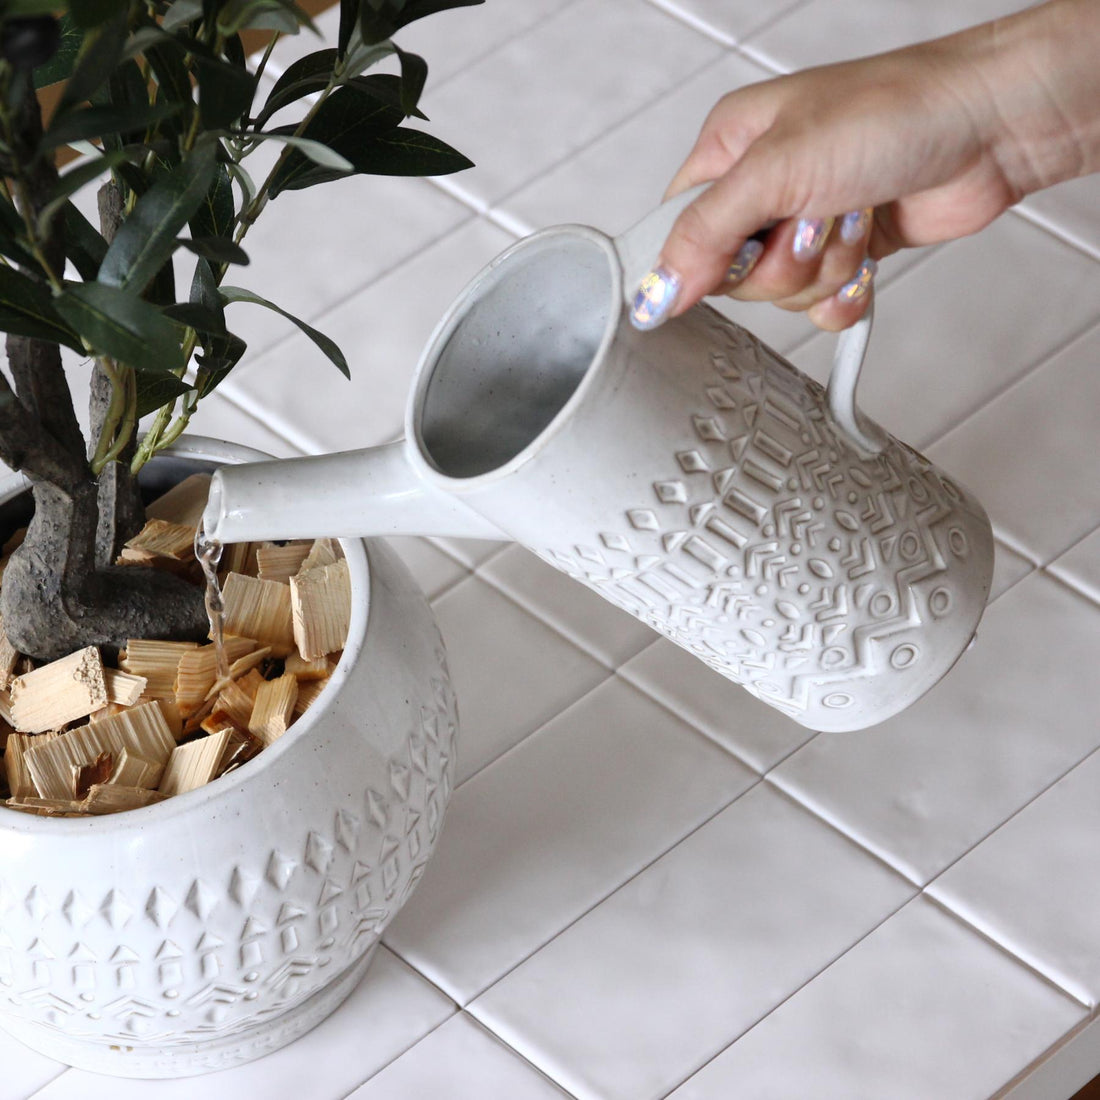 POTTE Ceramic Pot